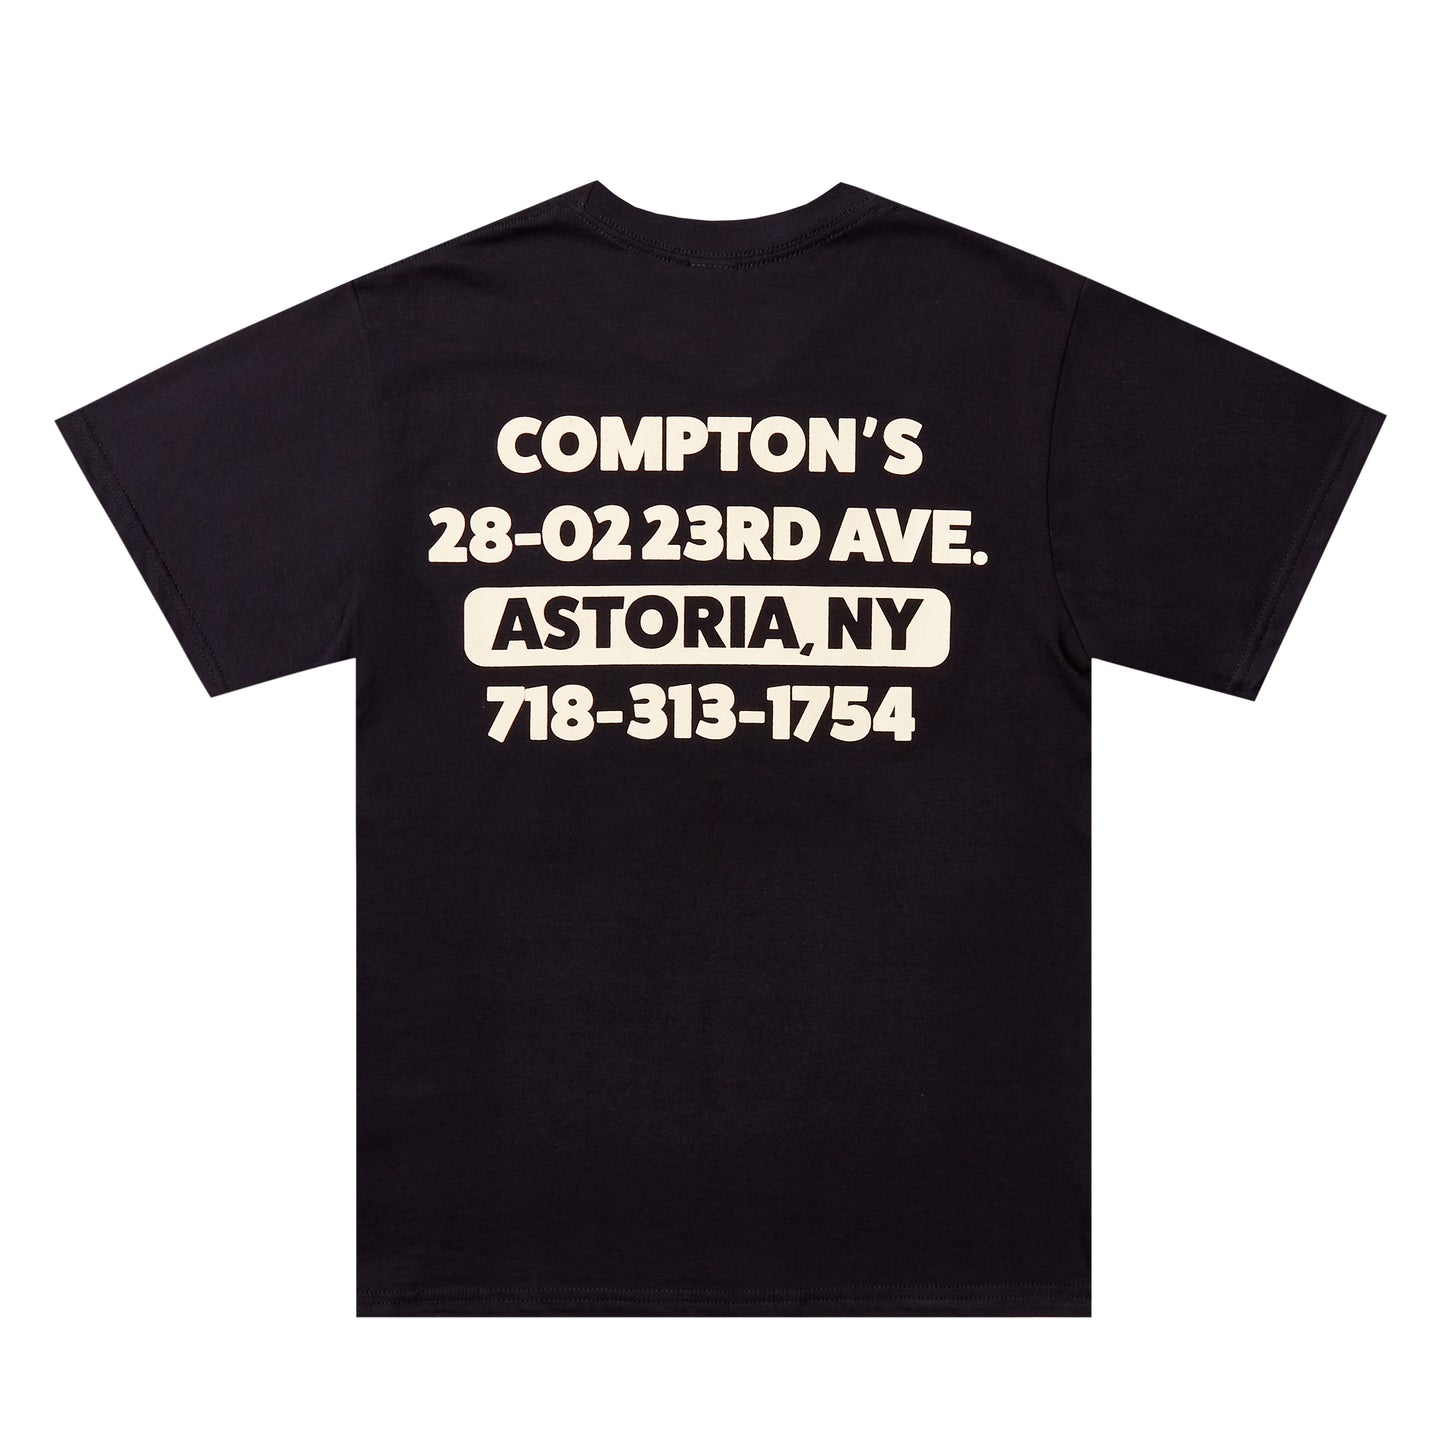 Compton's C2 Tee